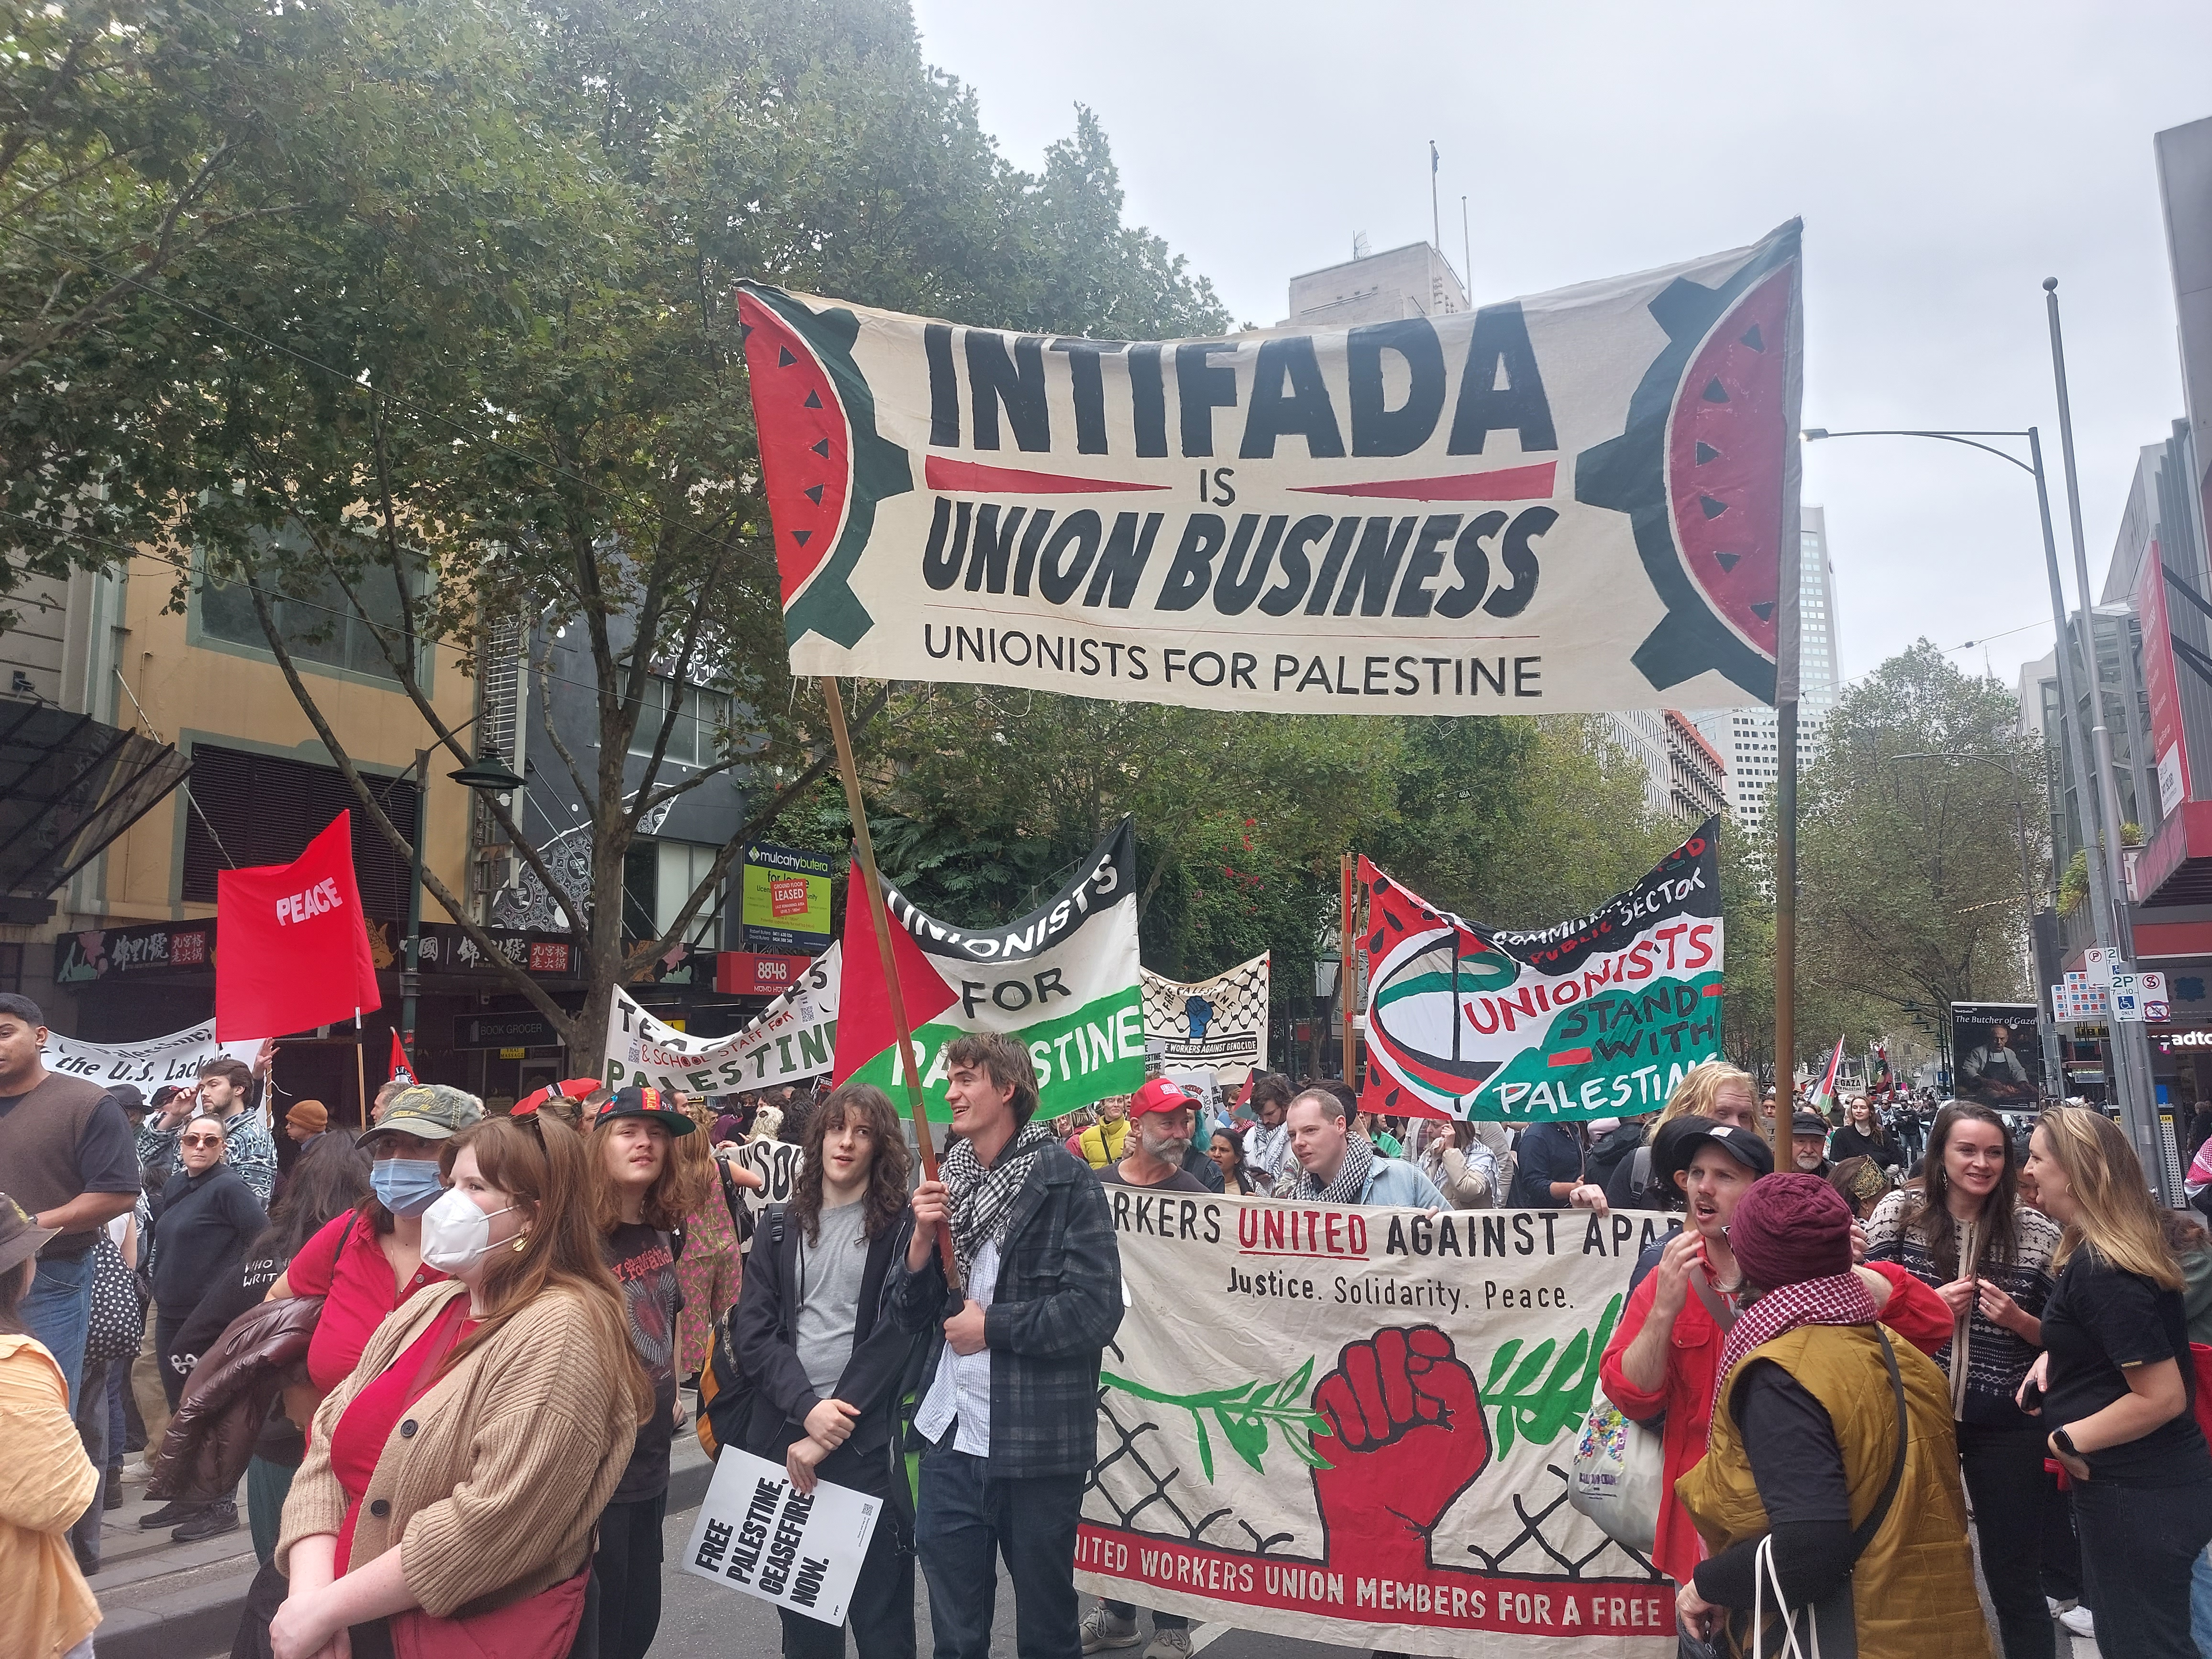 Intifada is union business, Naarm/Melbourne, April 14